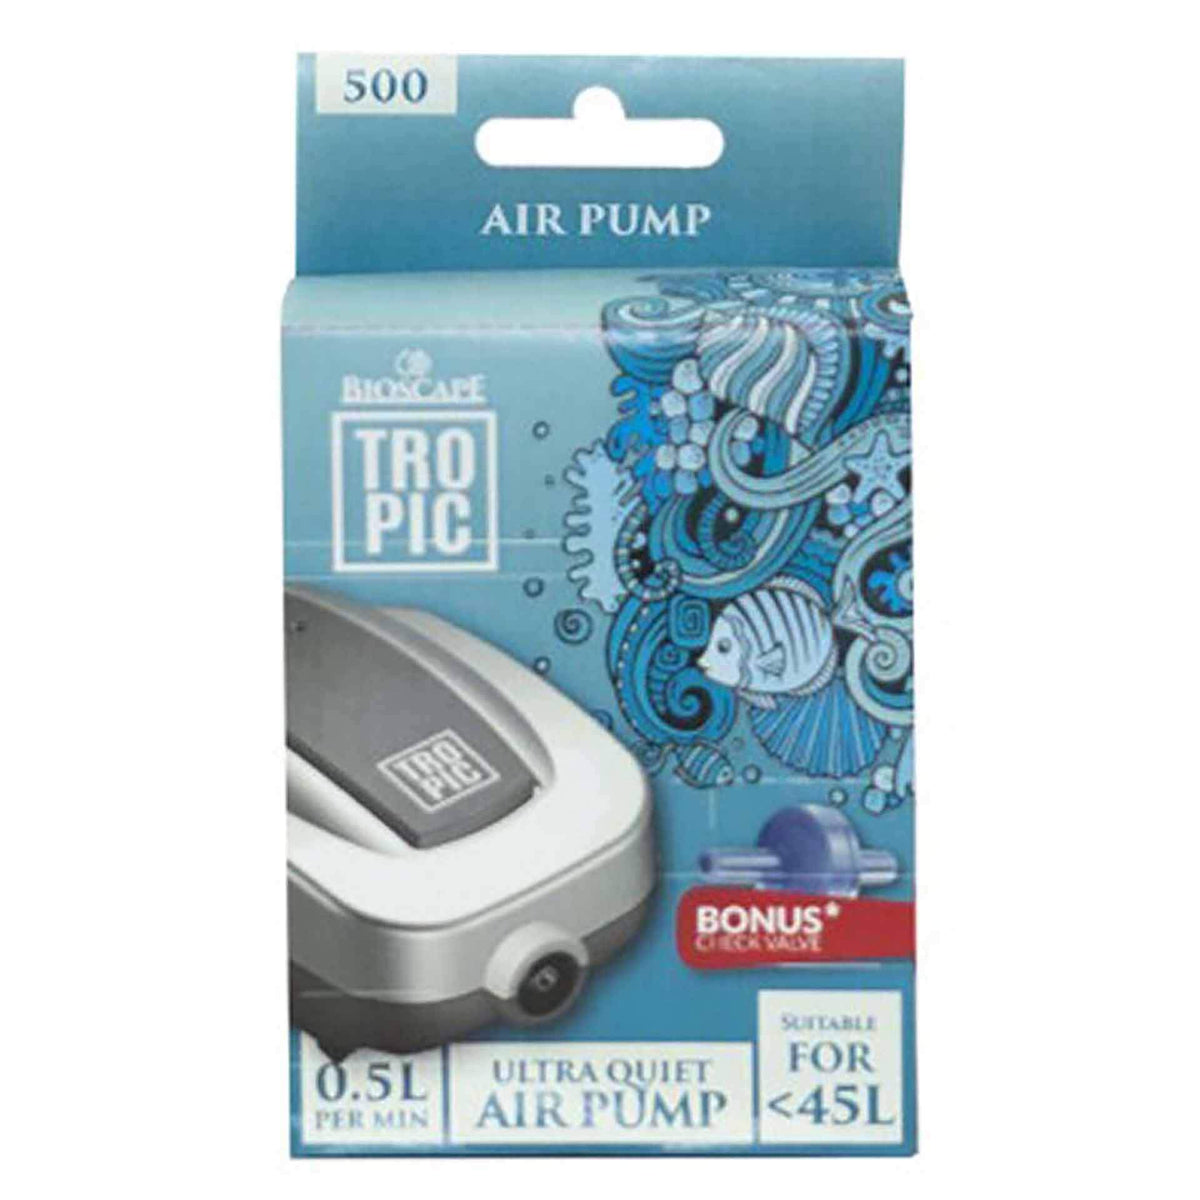 Bioscape Tropic 500 Air Pump 0.5l/m for tanks up to 45l